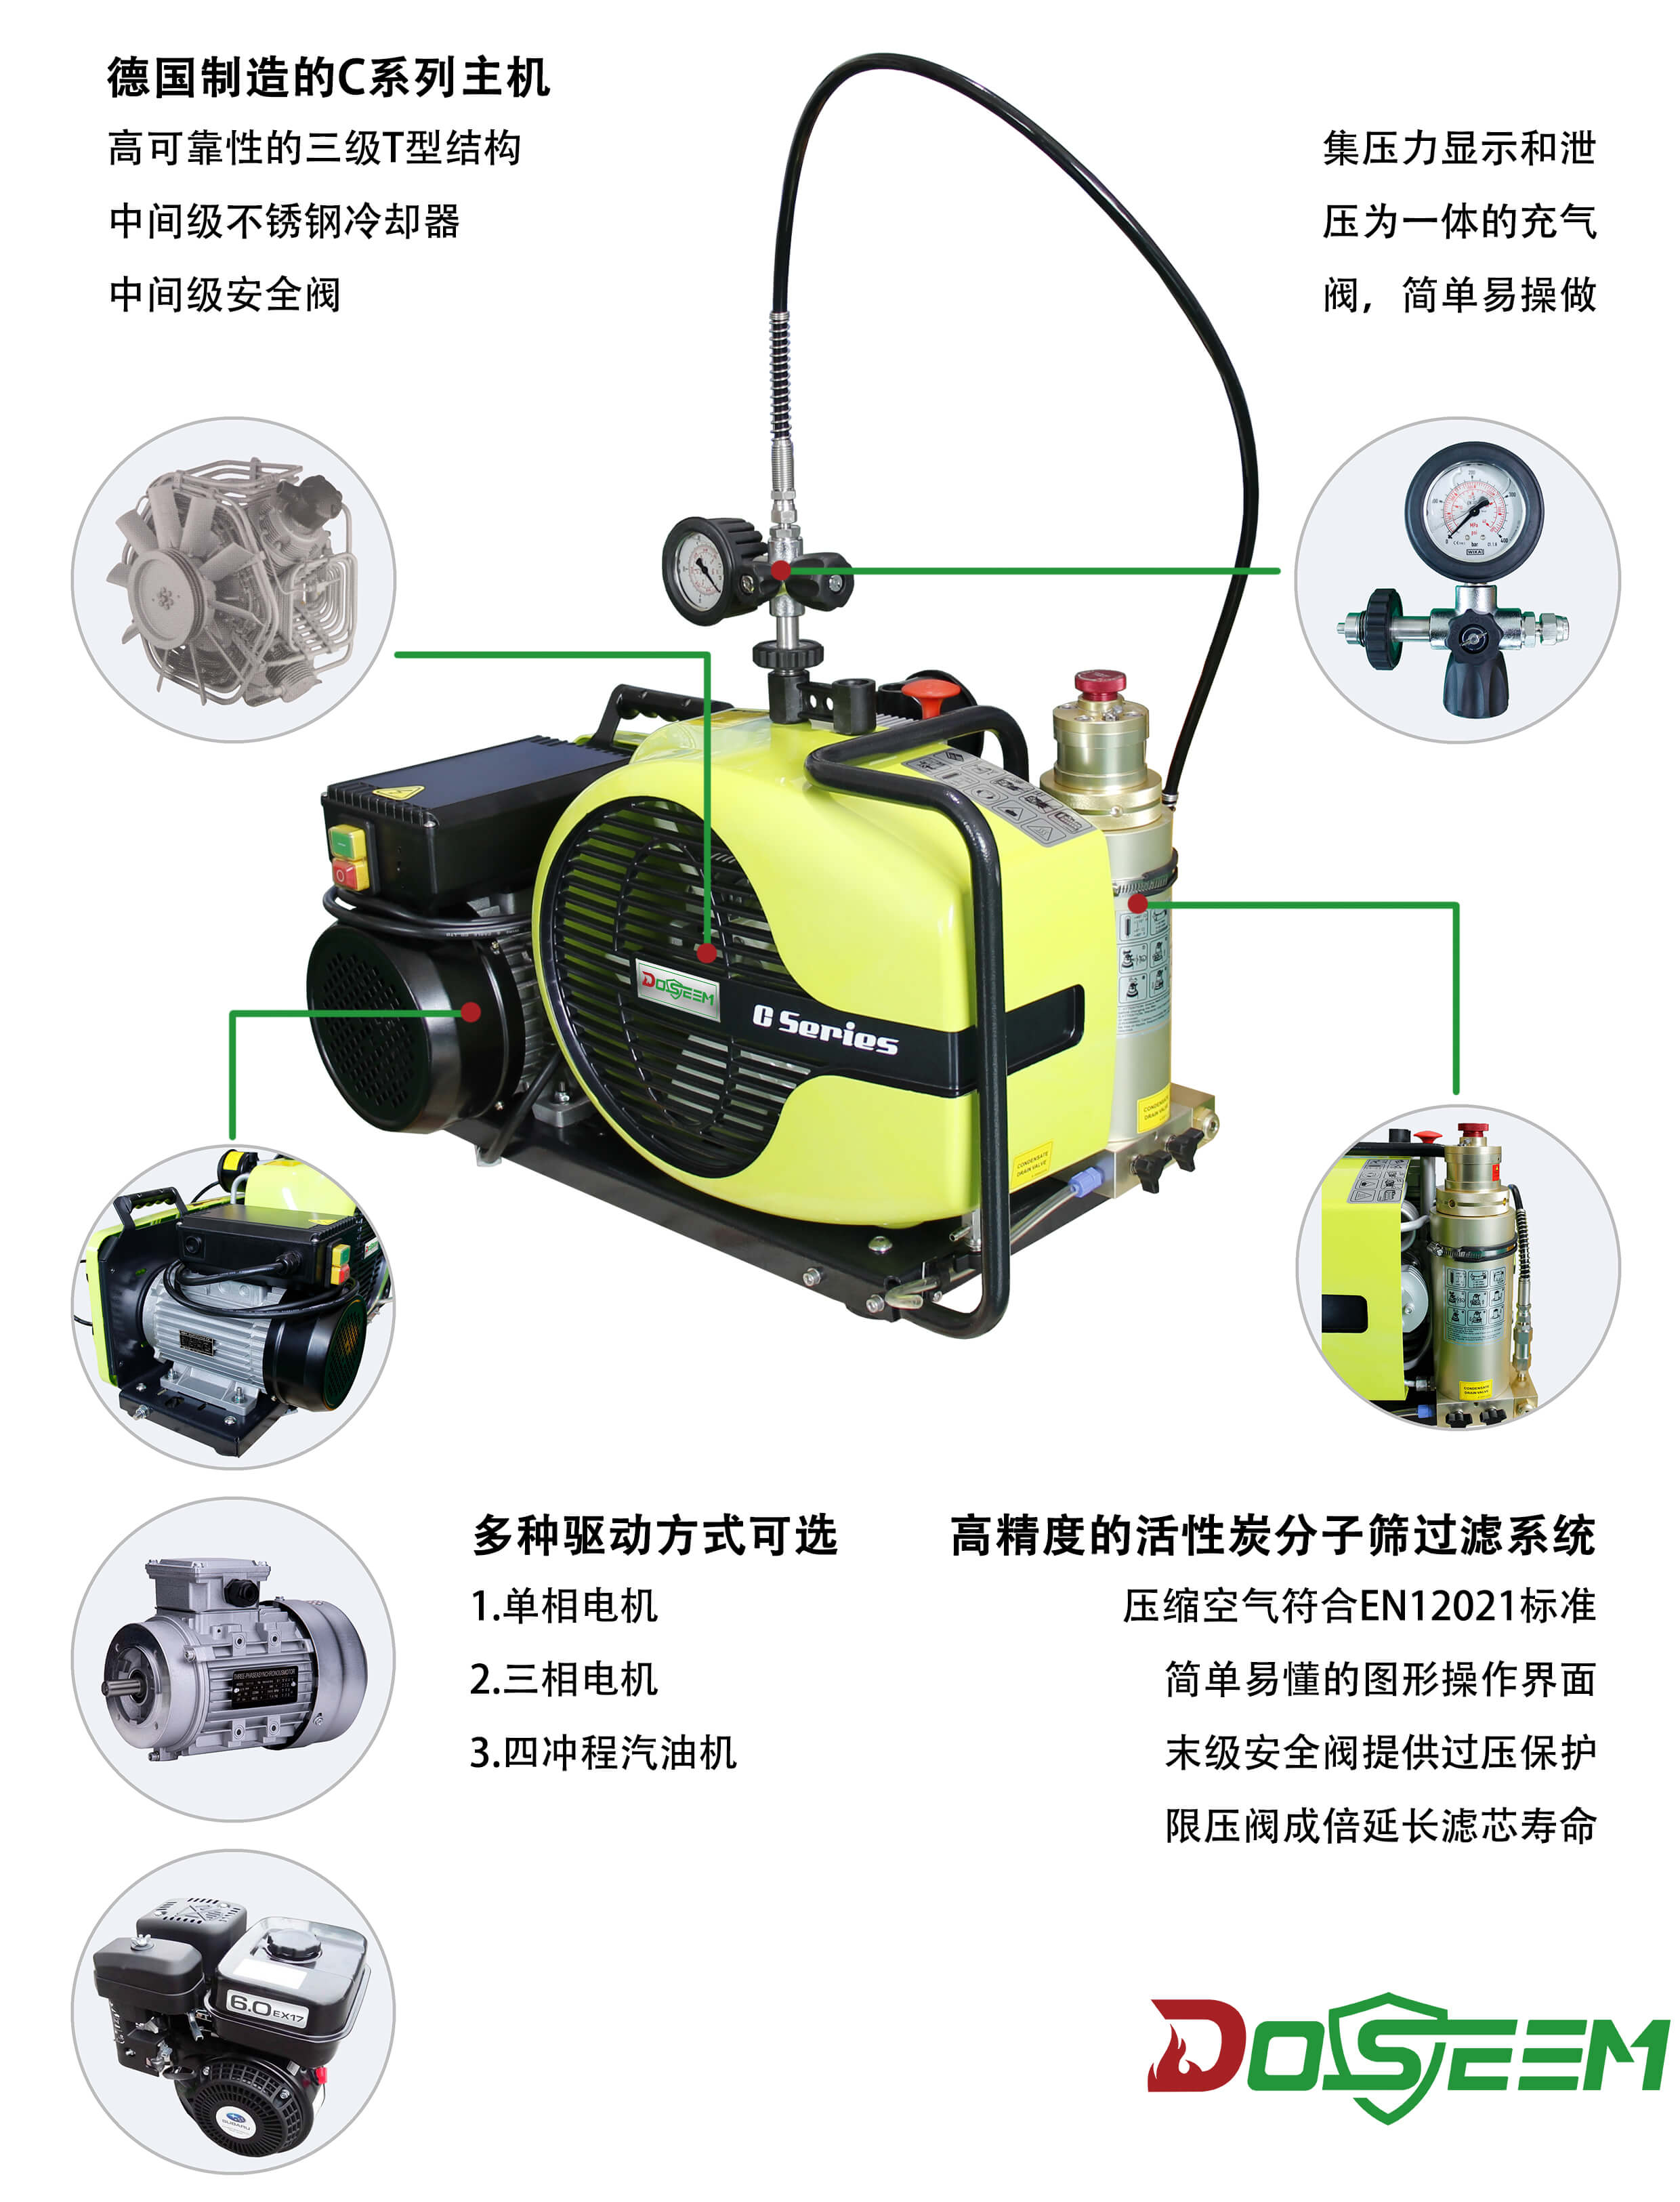 DS150系列便携式呼吸空气压缩机 1